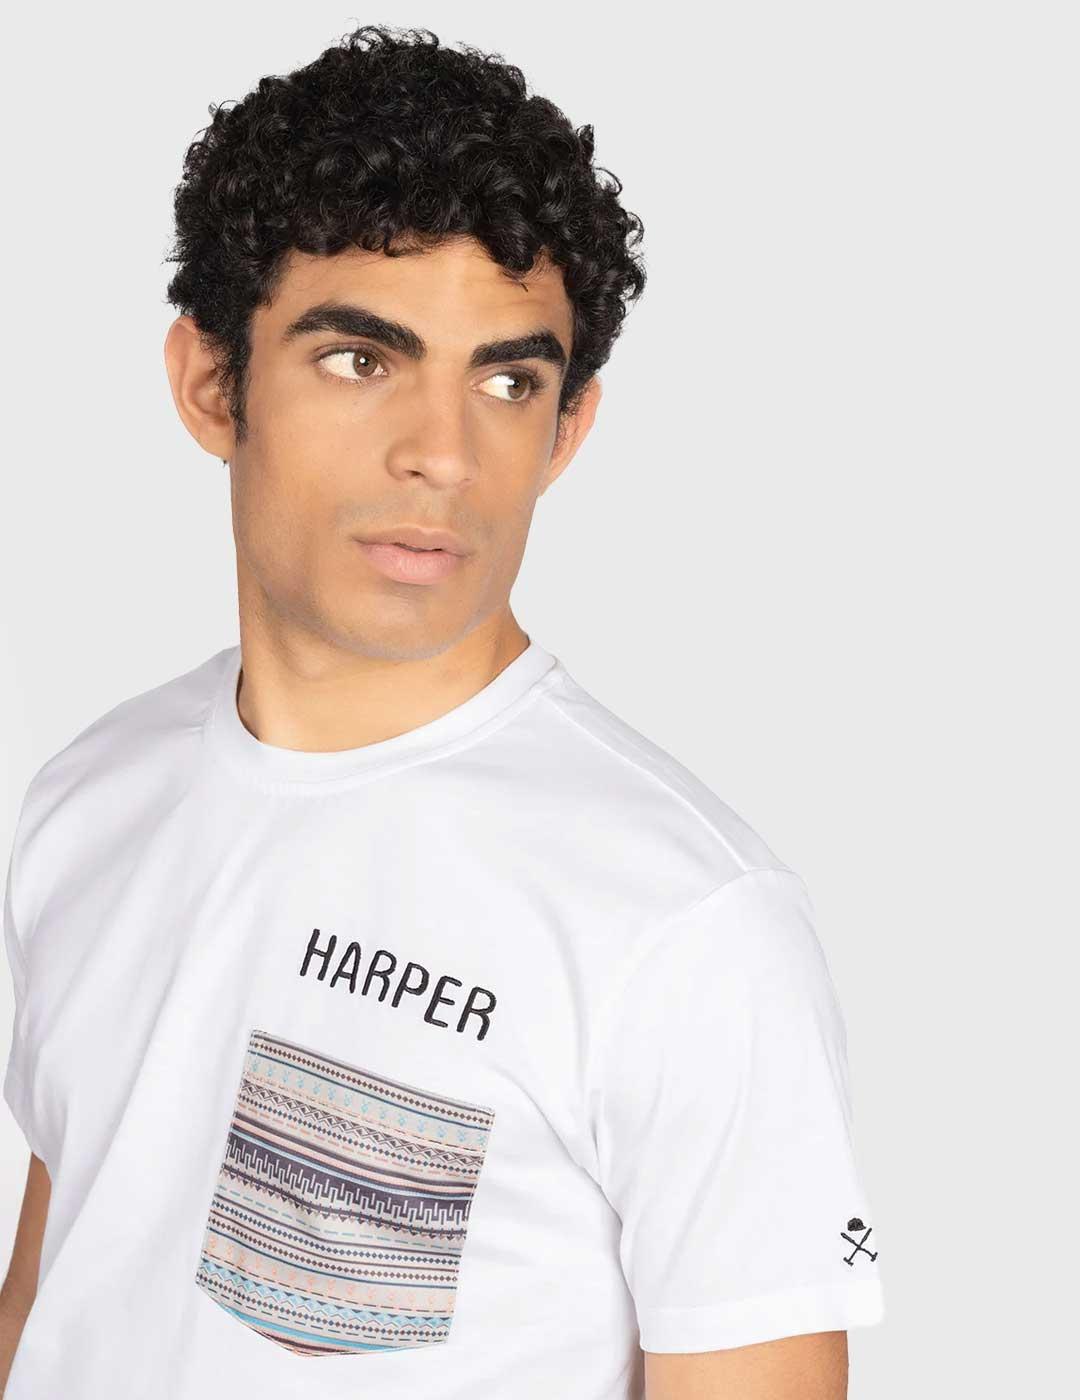 Harper & Neyer Camiseta Pocket blanca para hombre